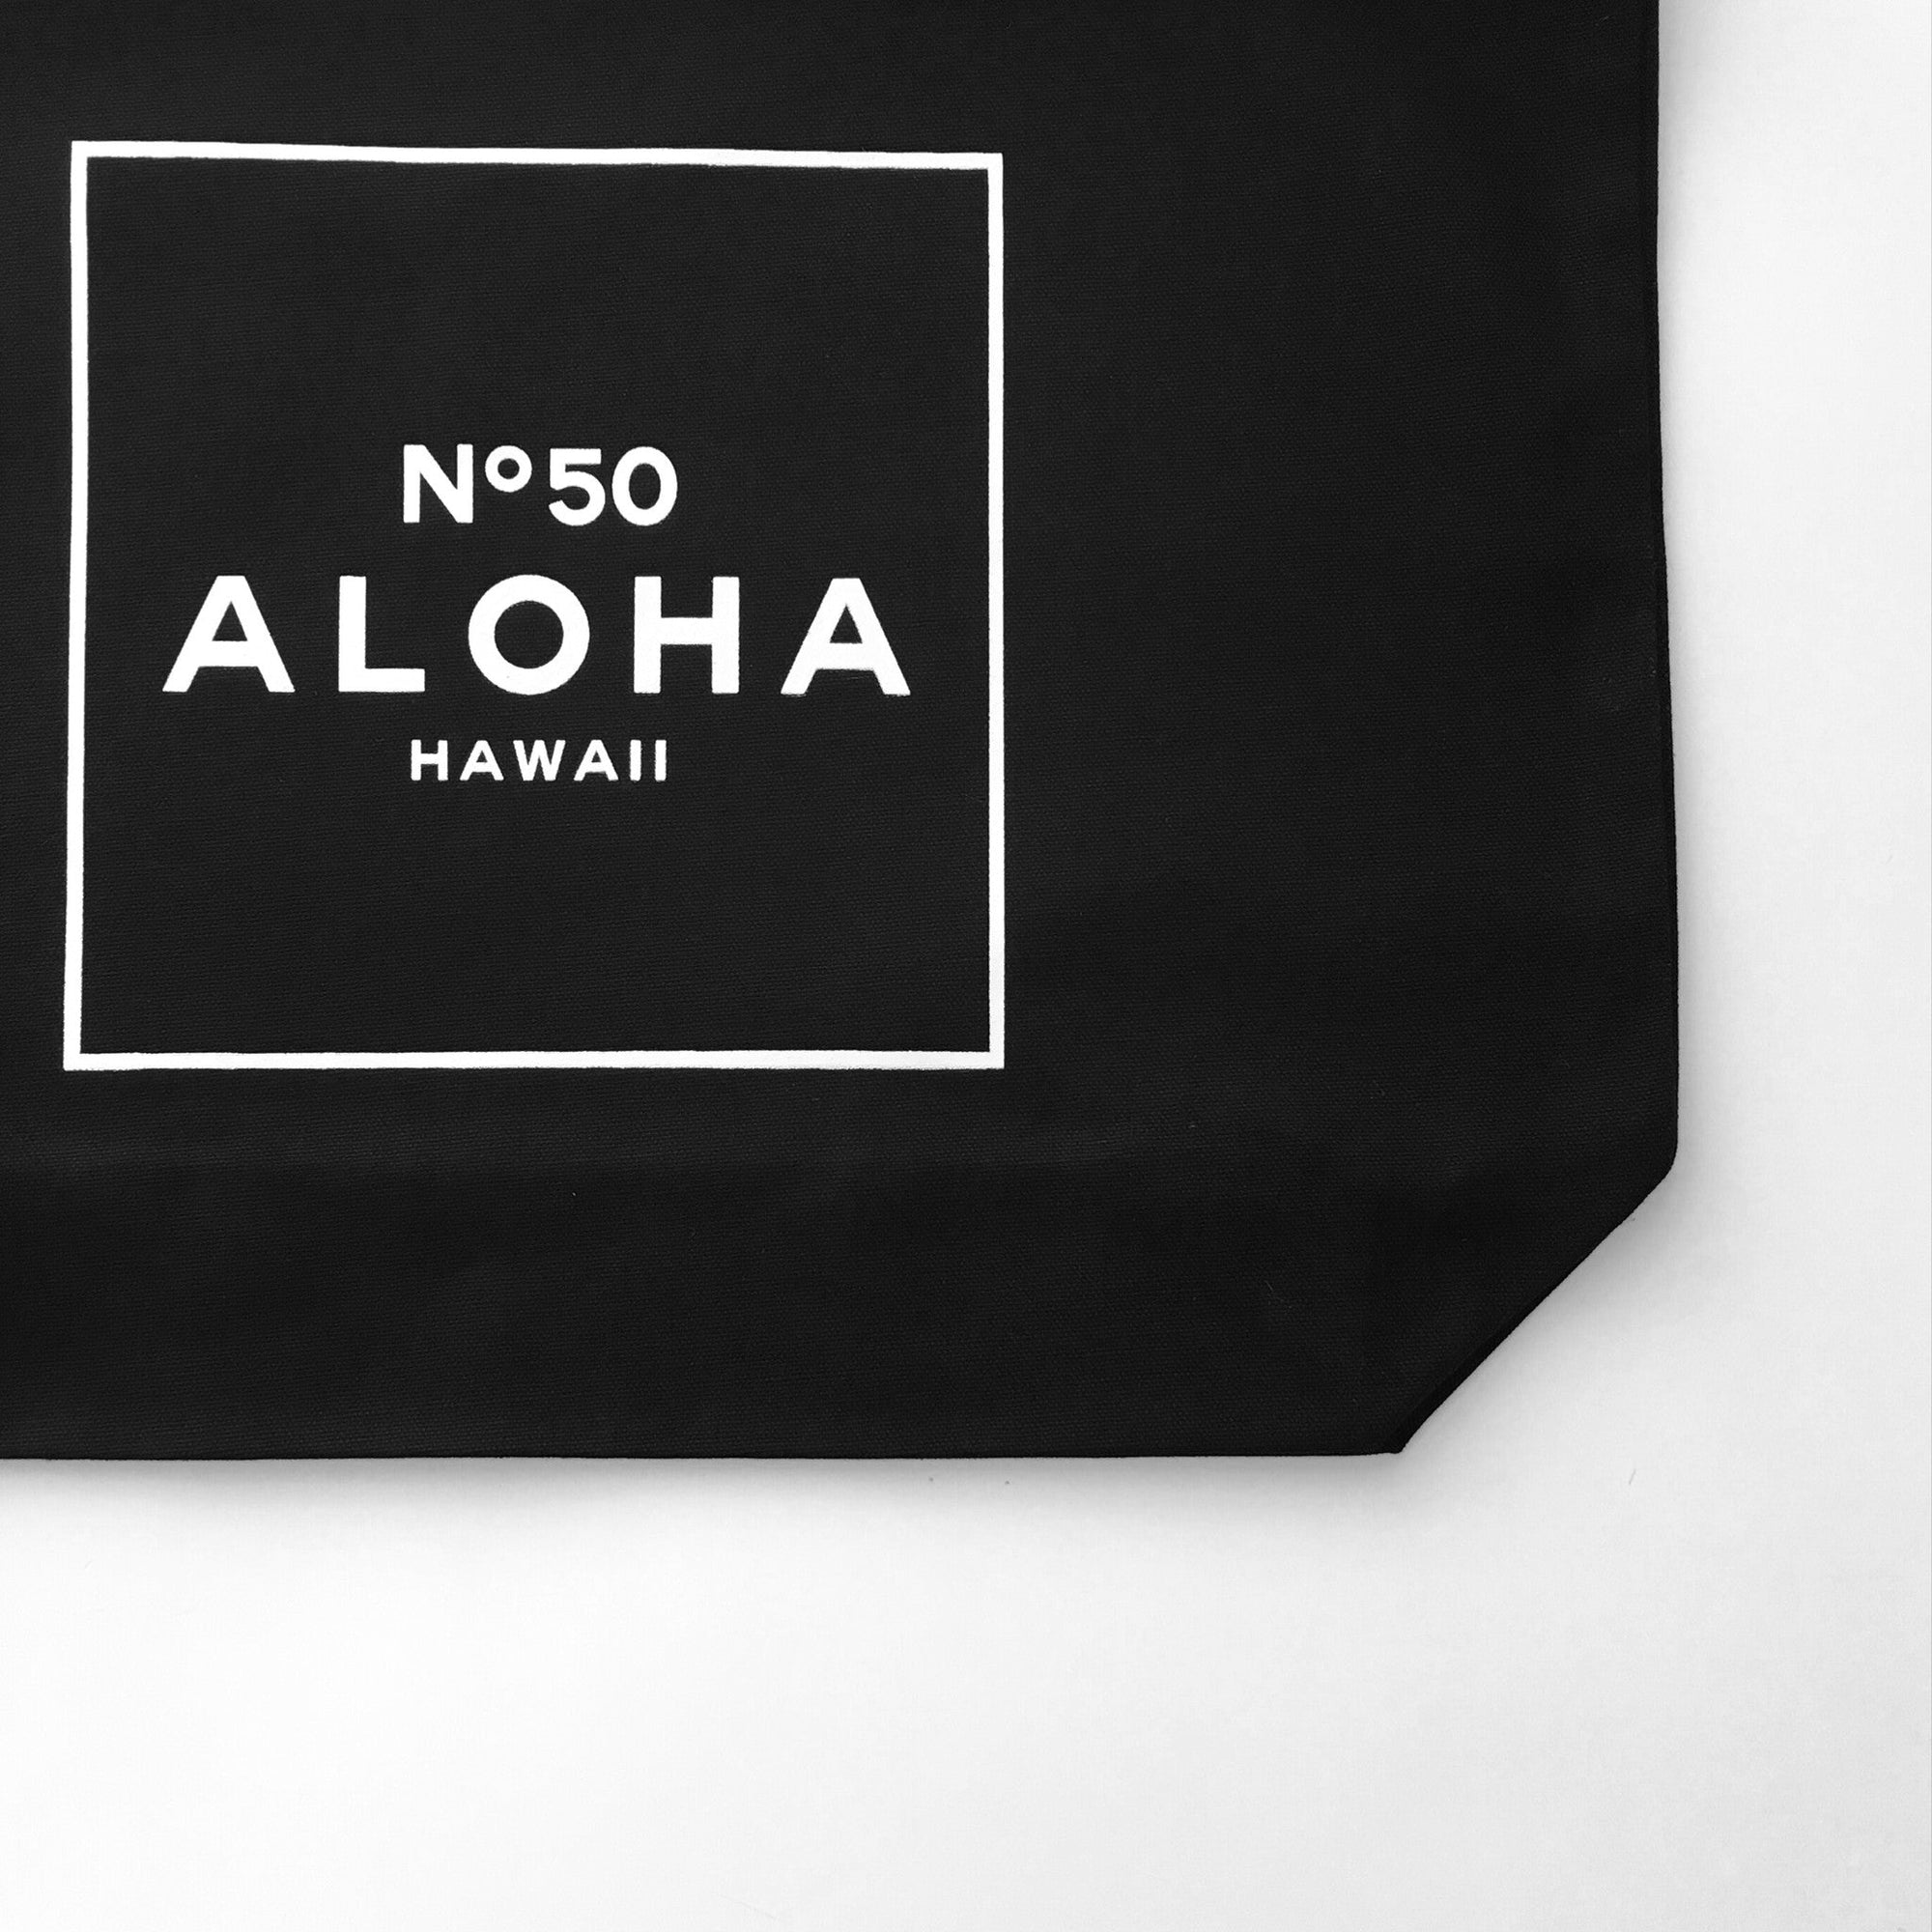 Pop-Up Mākeke - Workshop 28 HI - Aloha No. 50 Zippered Tote with Hidden Pocket in Black